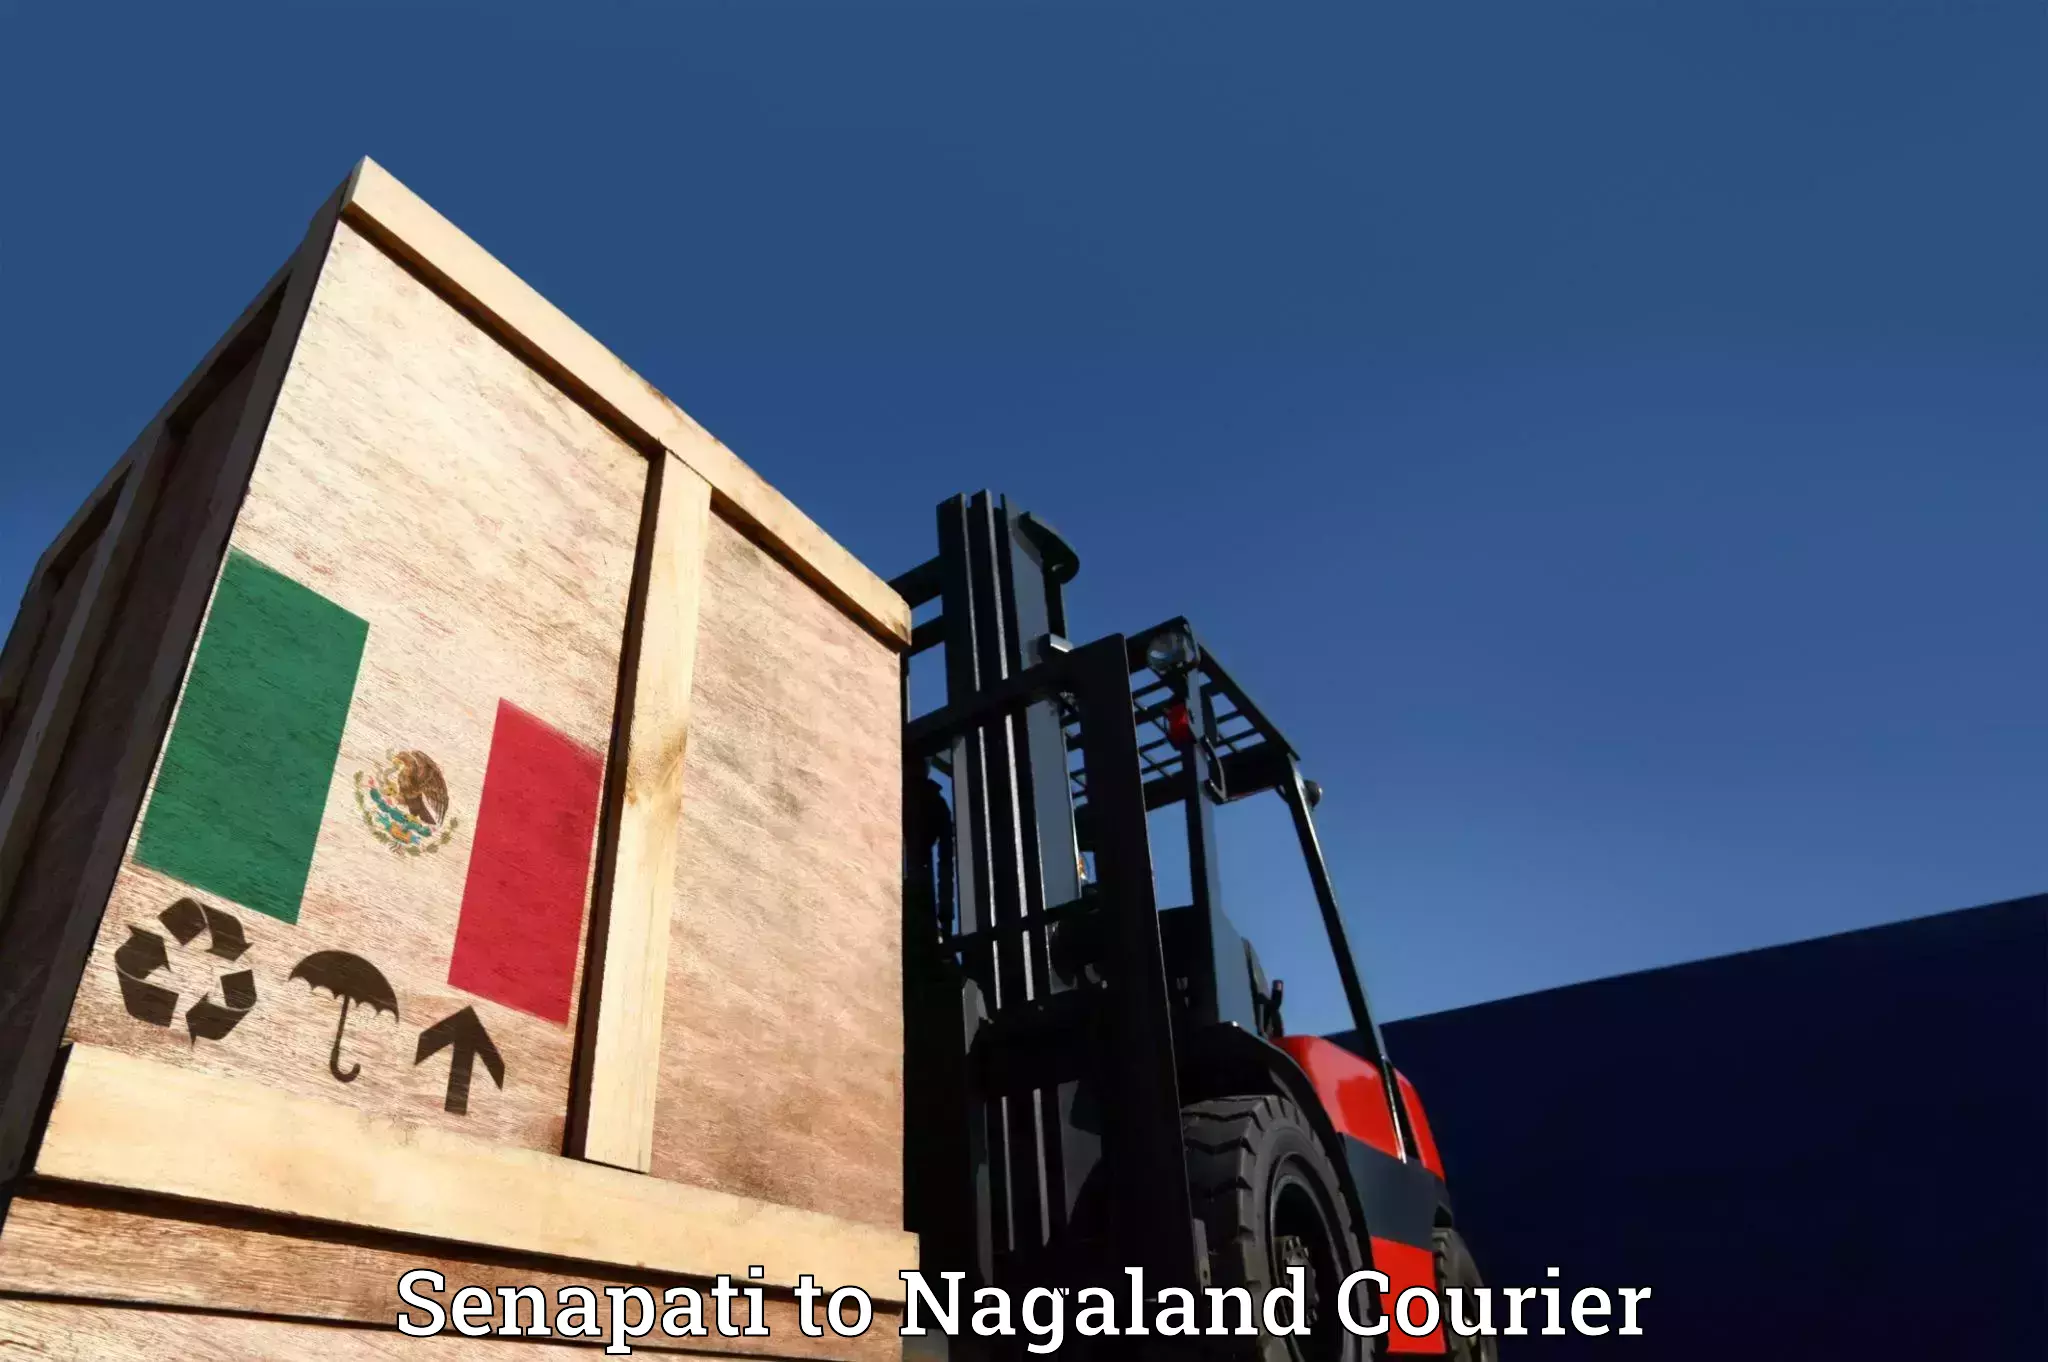 Moving service excellence Senapati to Nagaland